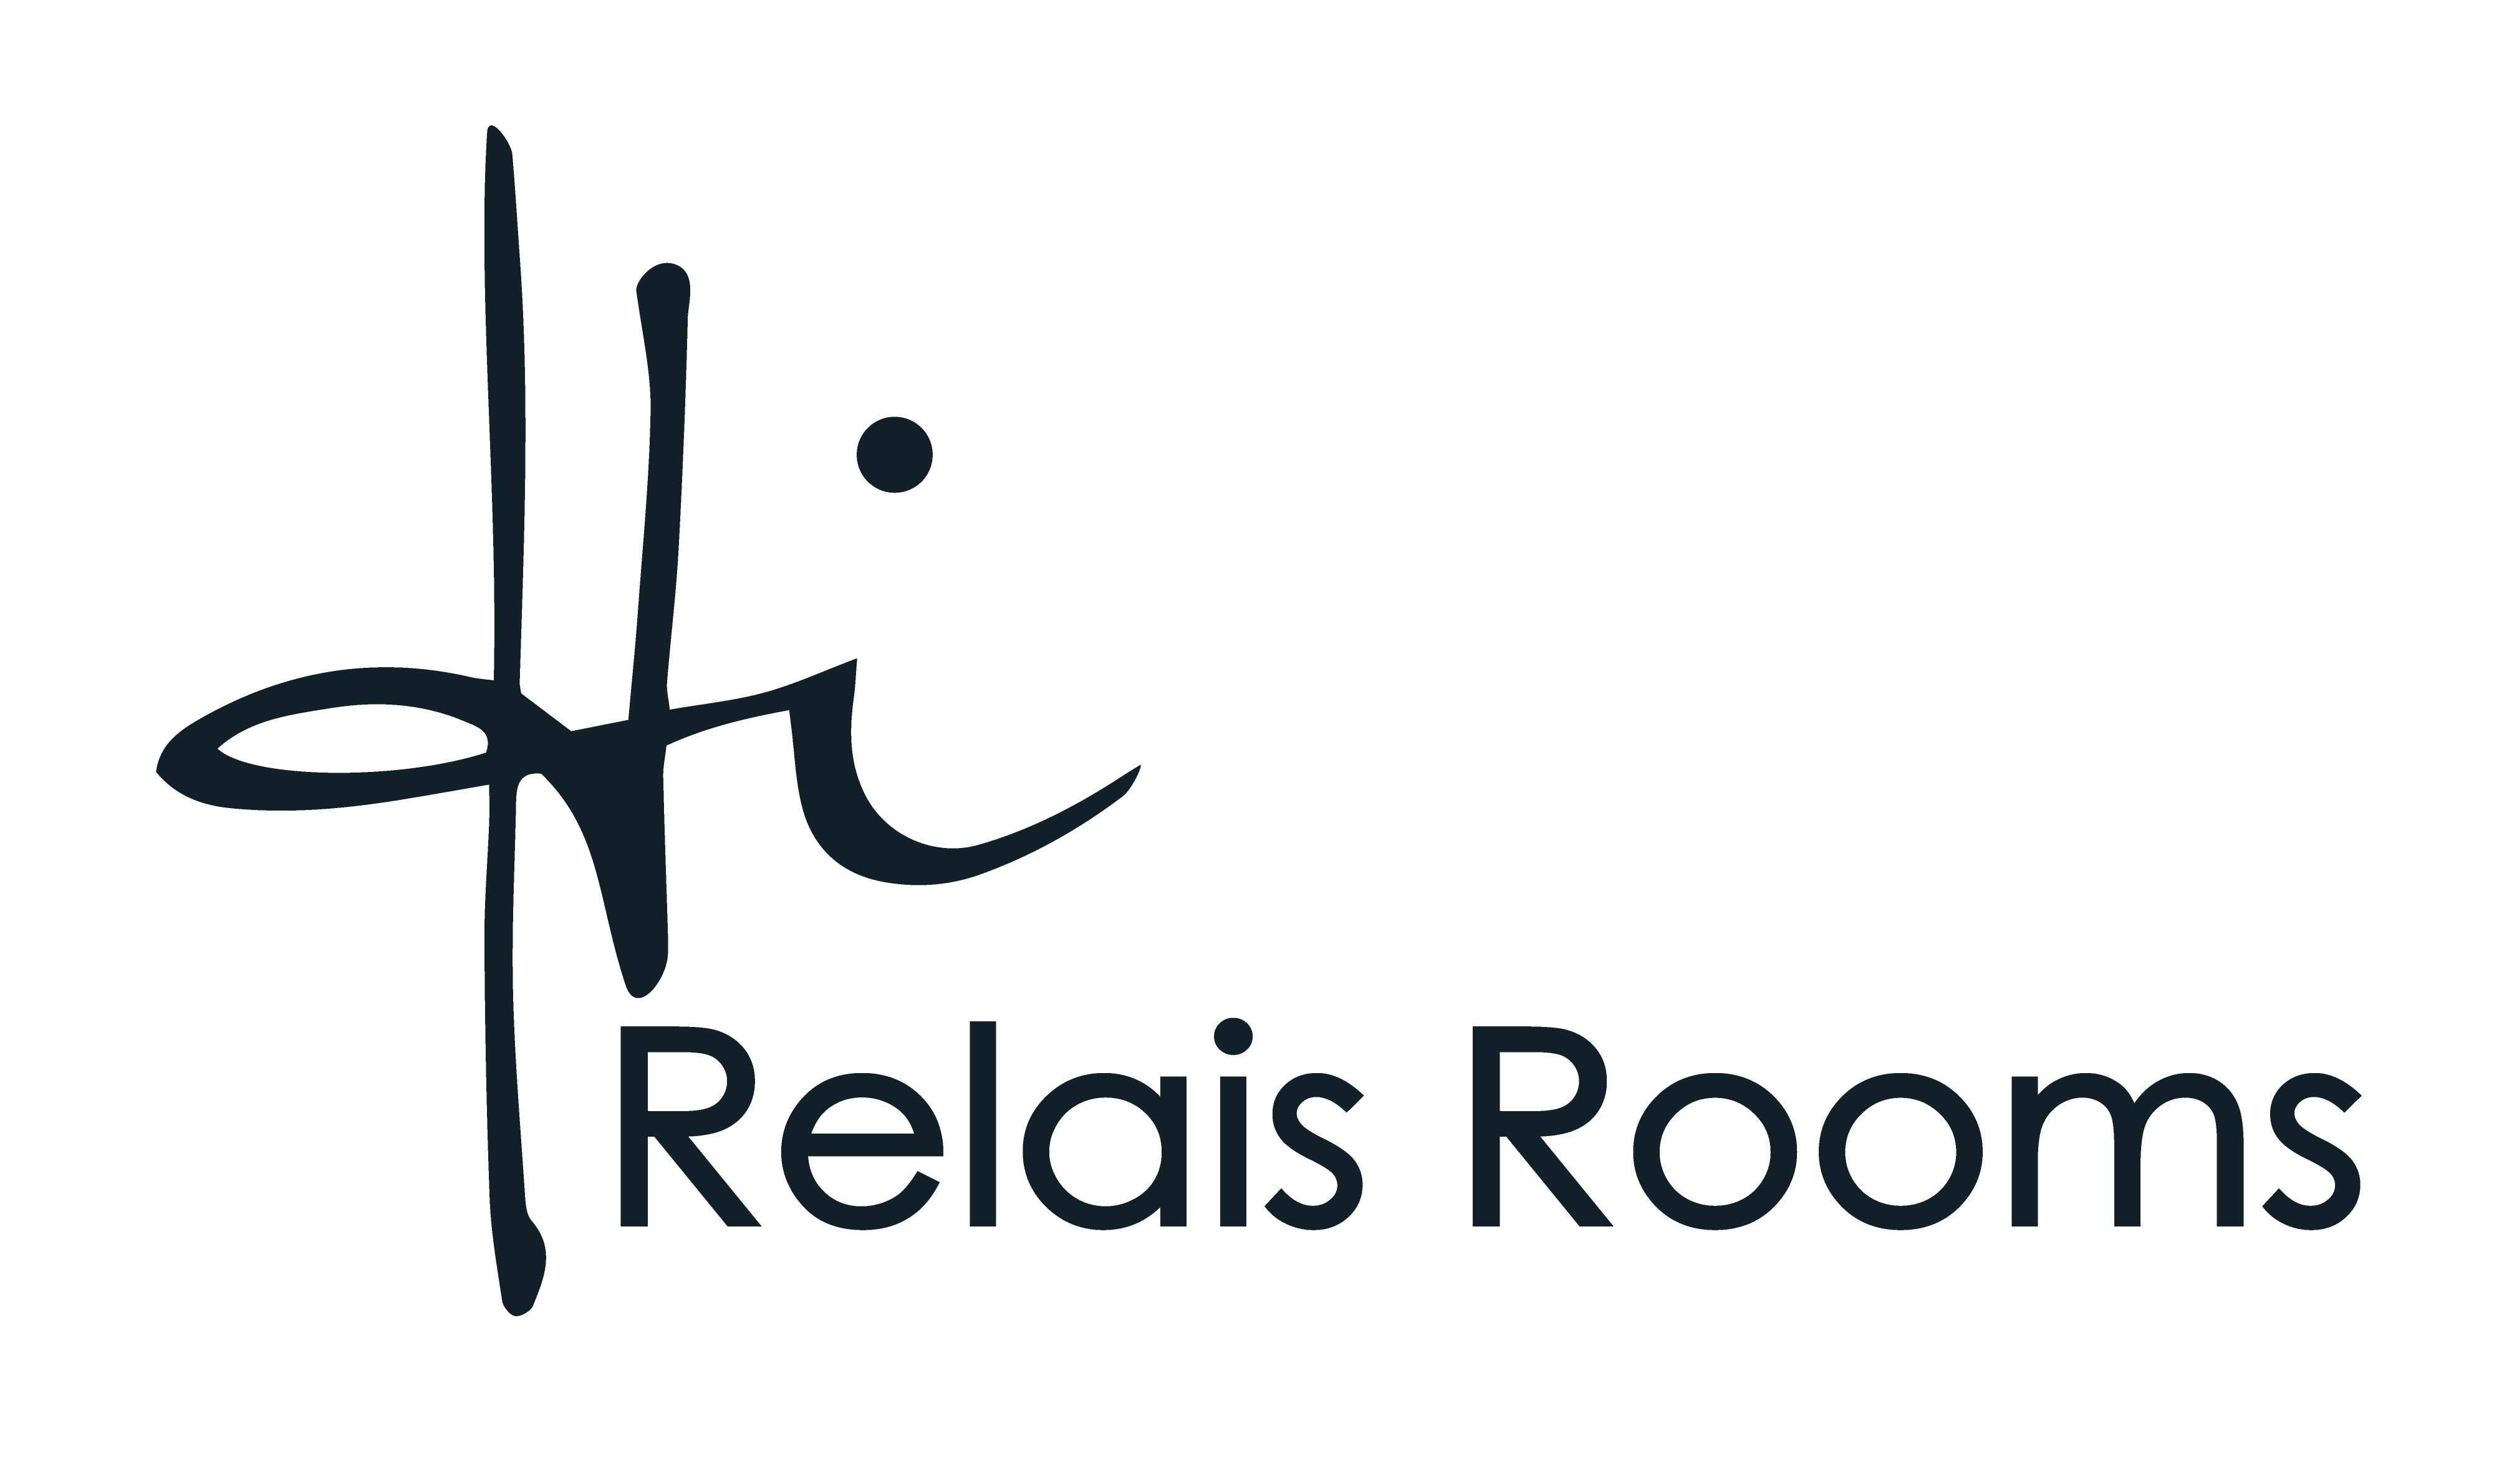 Hi Relais Rooms